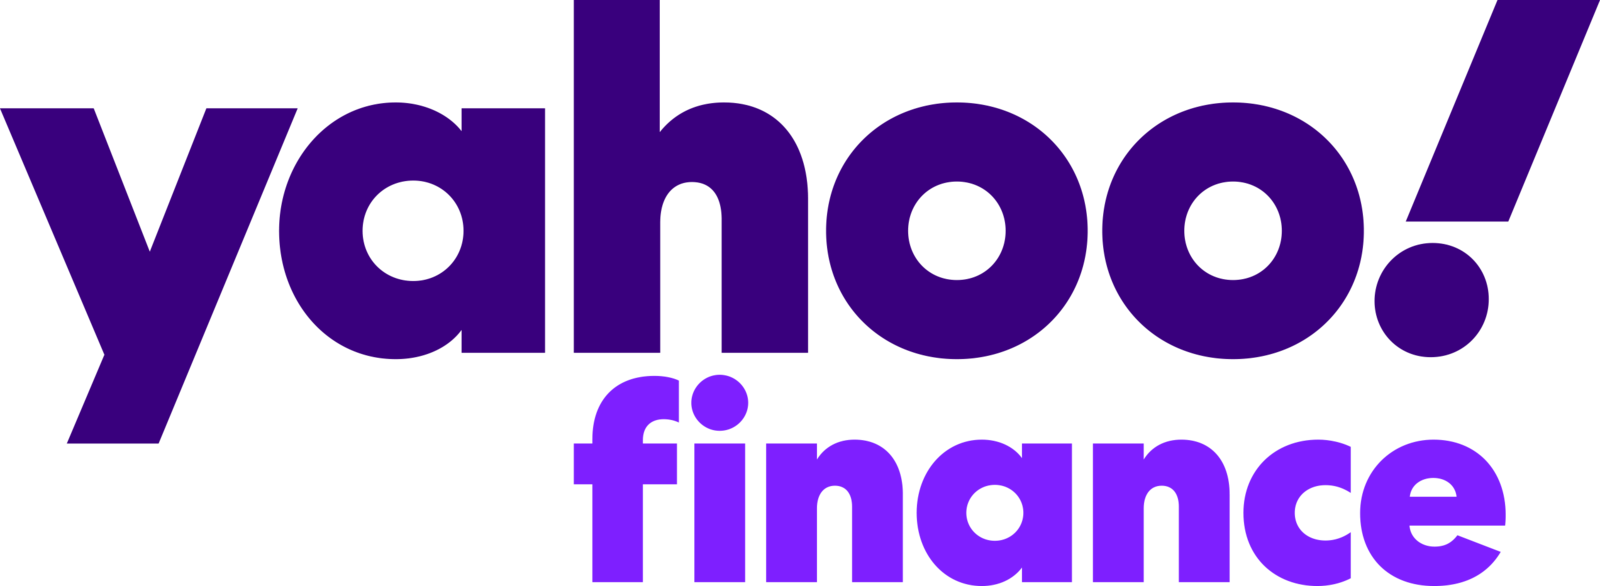 logo for Yahoo! Finance